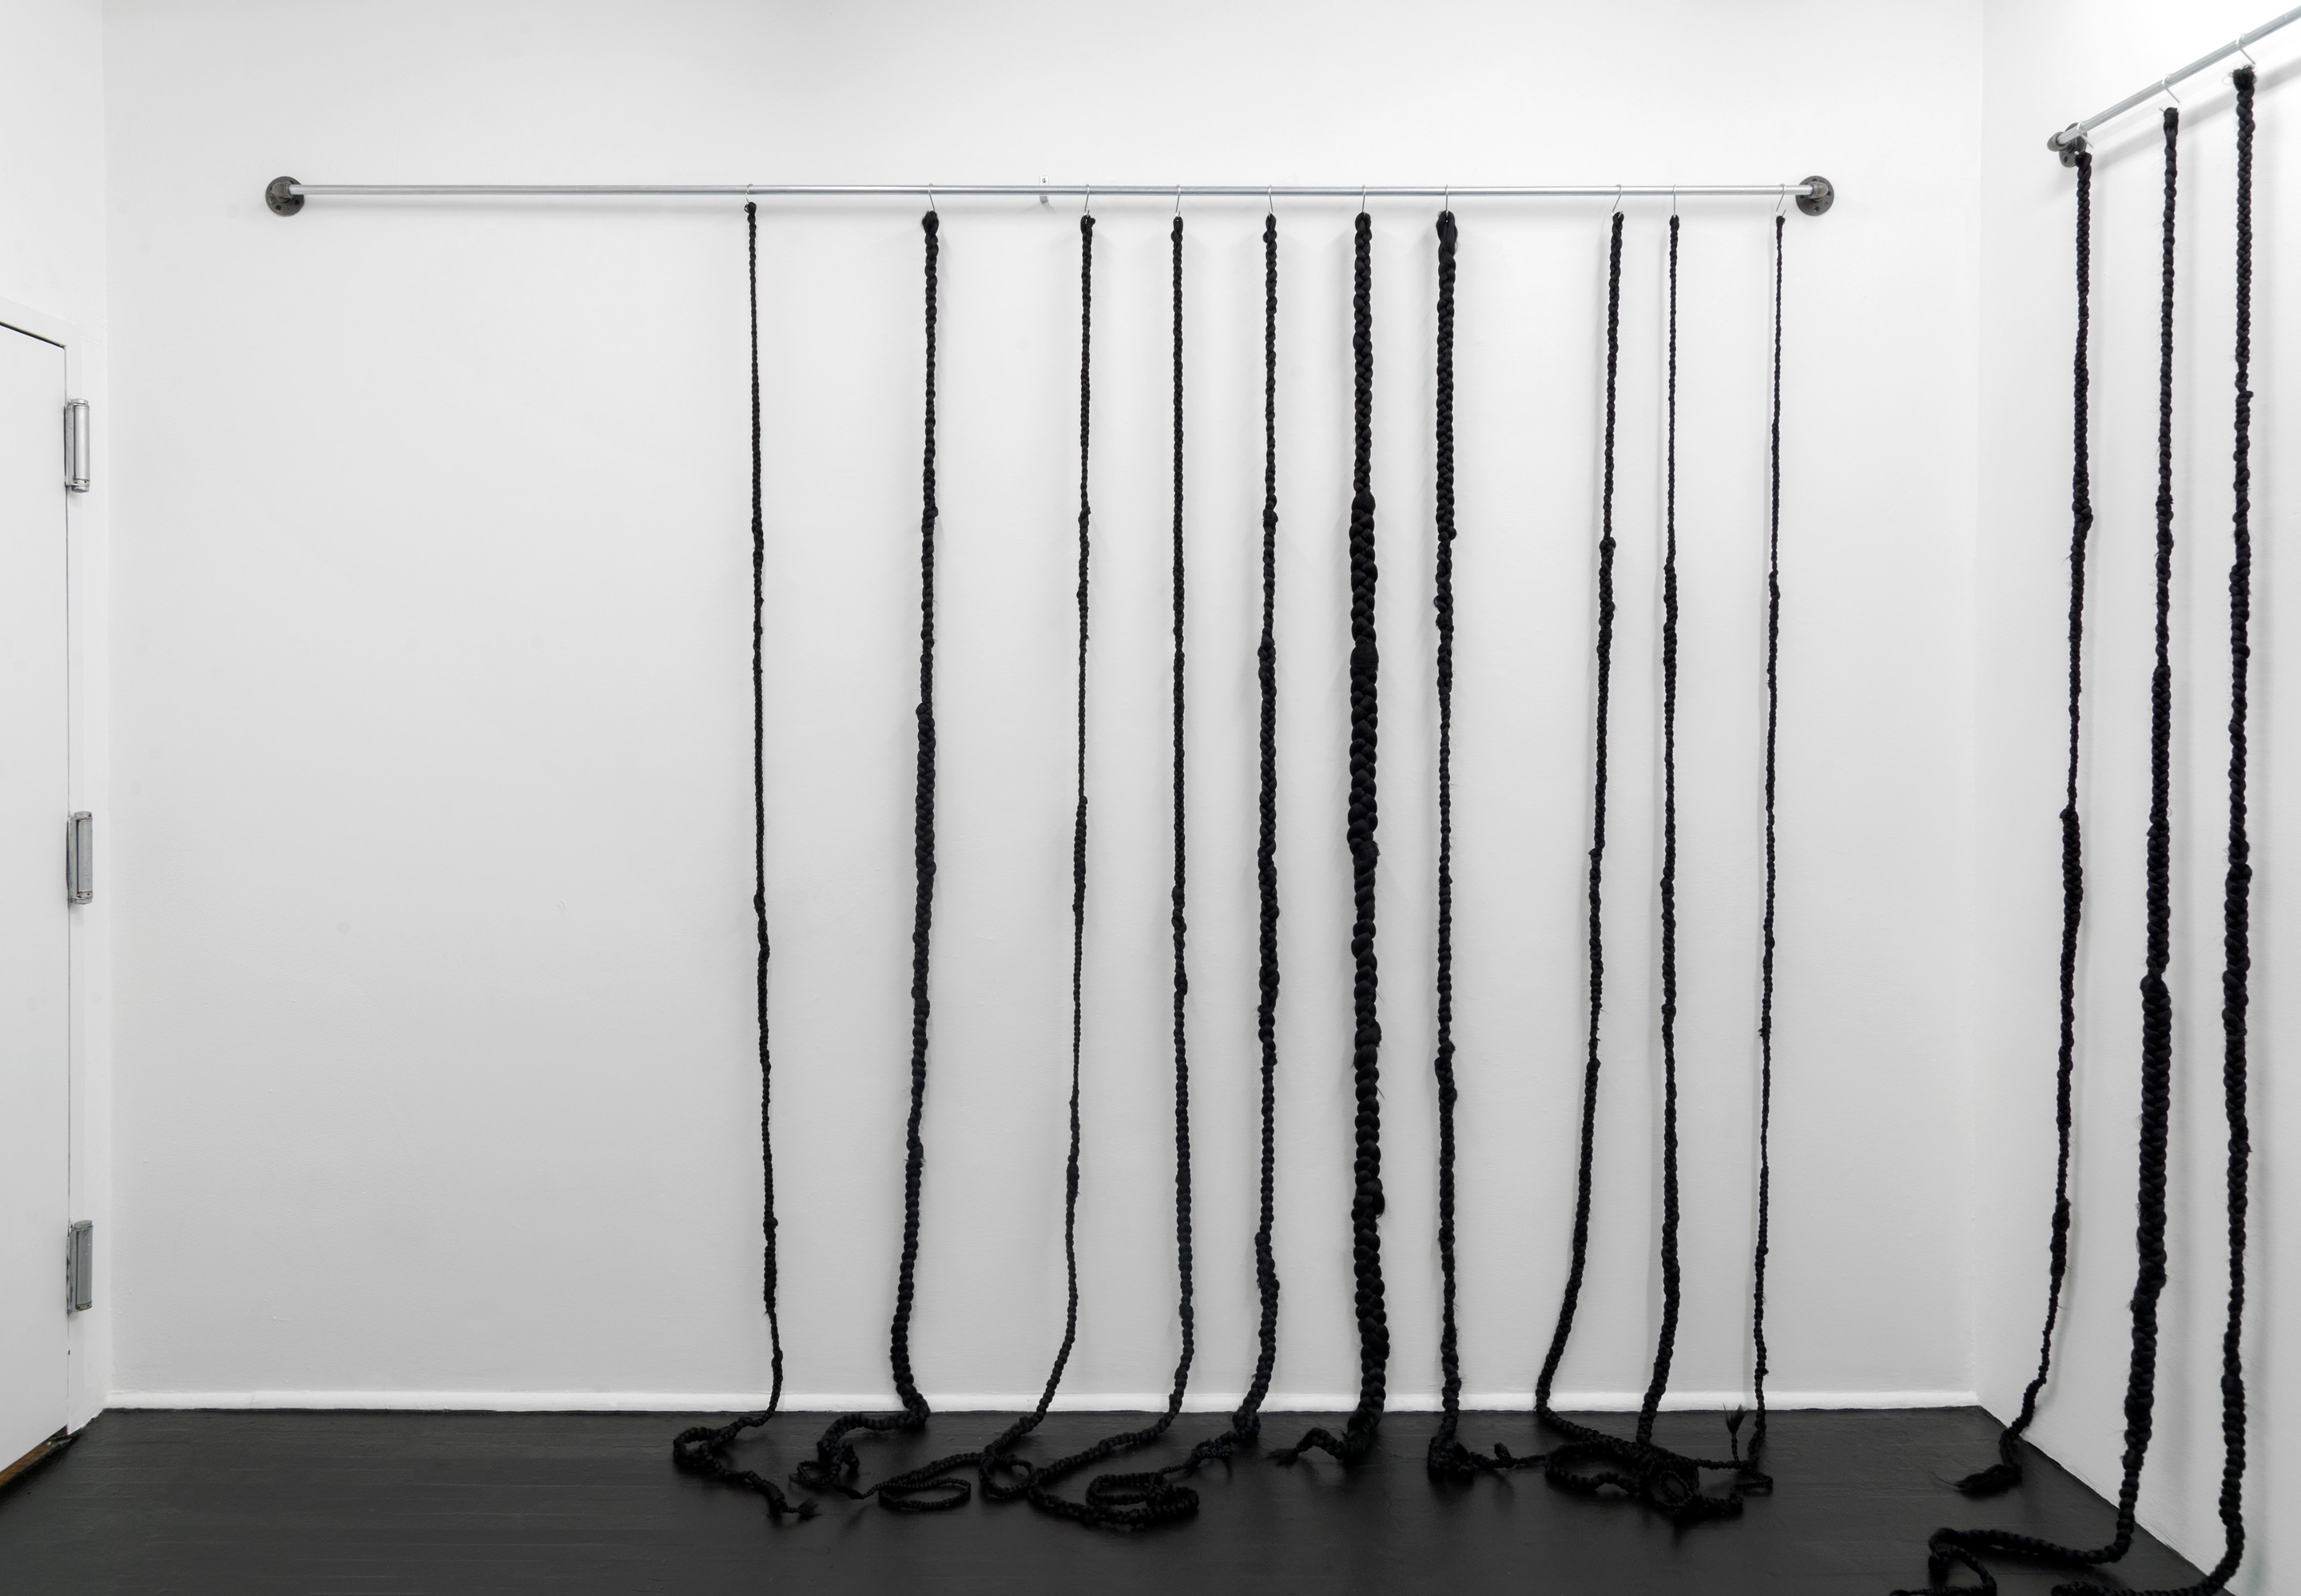 Kaas (Punishment) (2019)
Kanekalon hair, conduit, hooks, hardware
95h x 162w x 18d inches (241.3h x 411.48w x 45.72d cm)